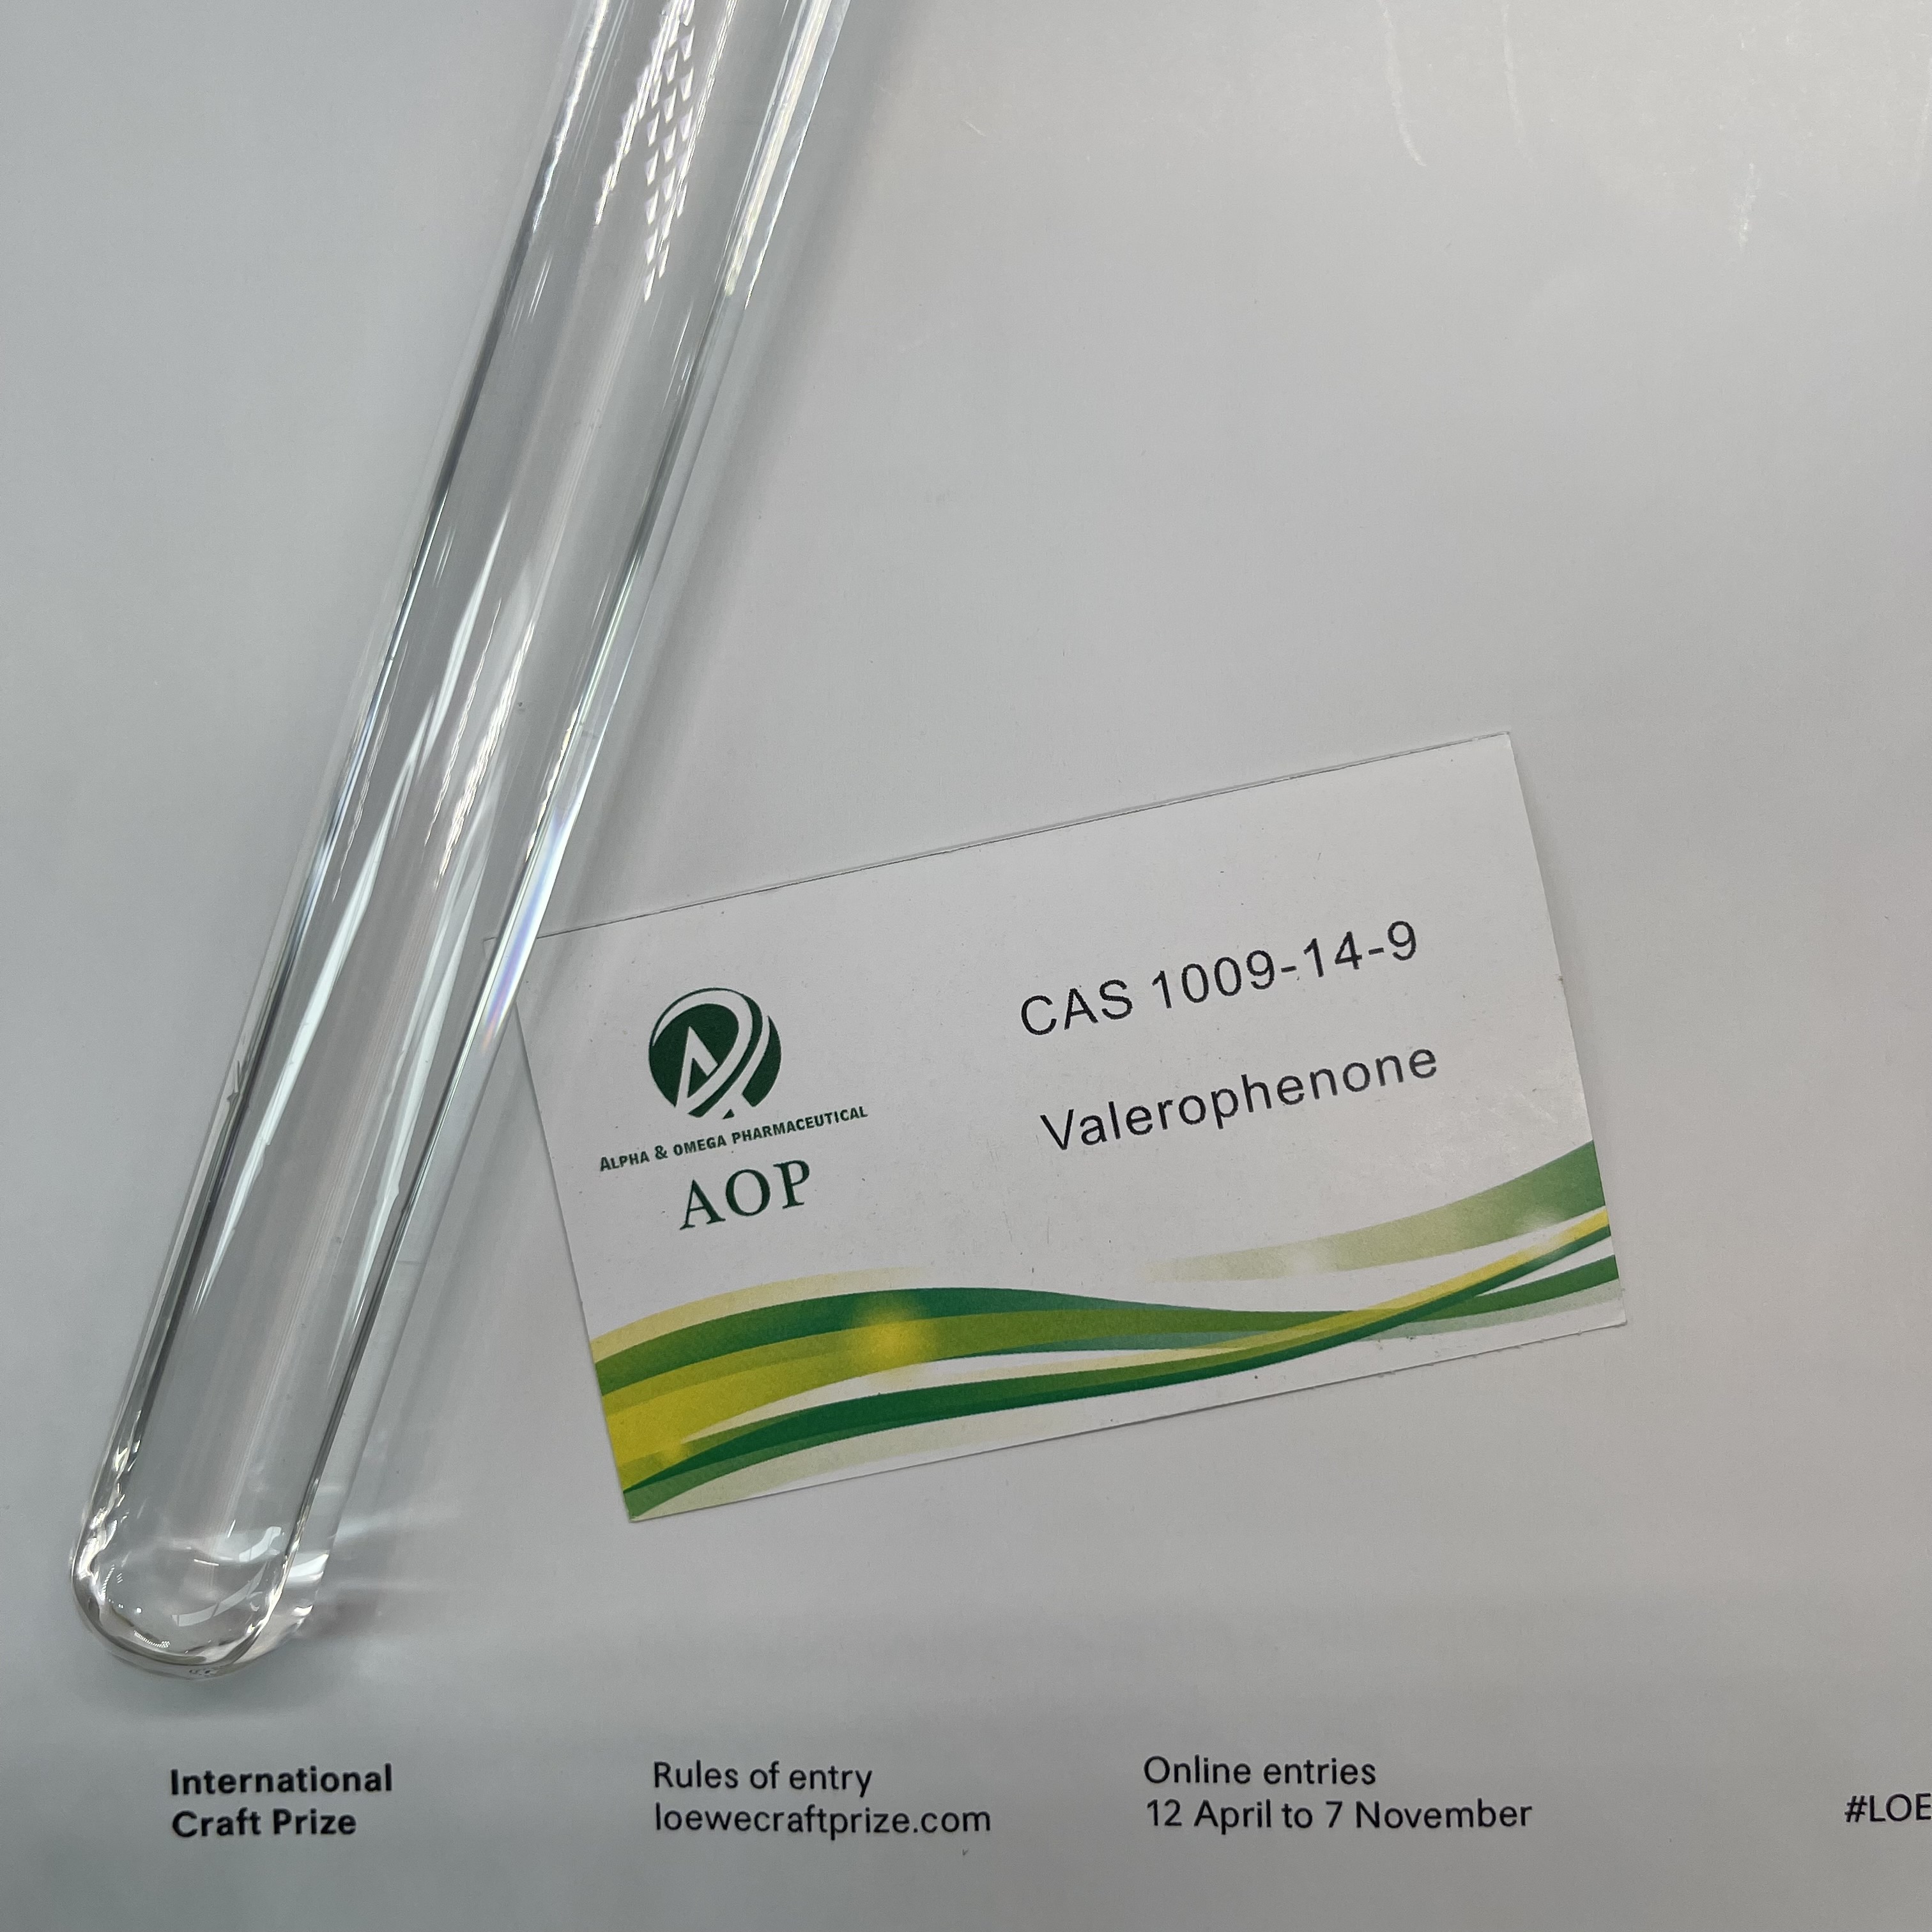 CAS 1009-14-9 Product Name: Valerophenone